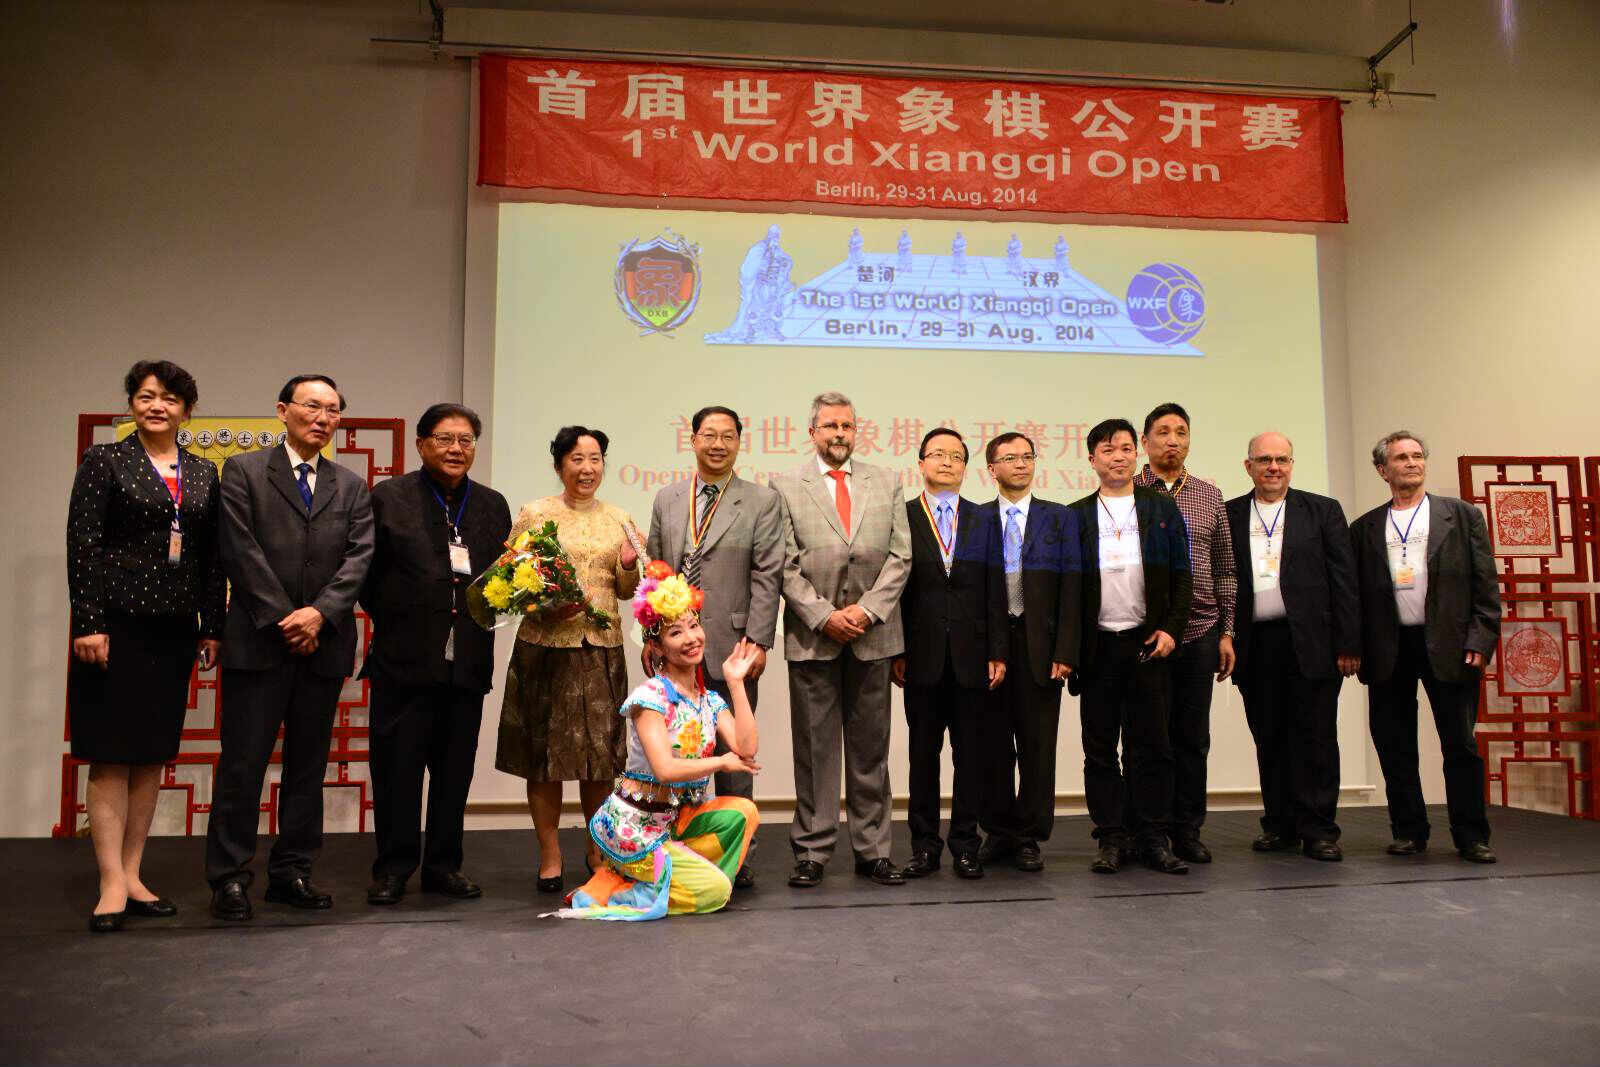 2014 World Xiangqi Open opening ceremony